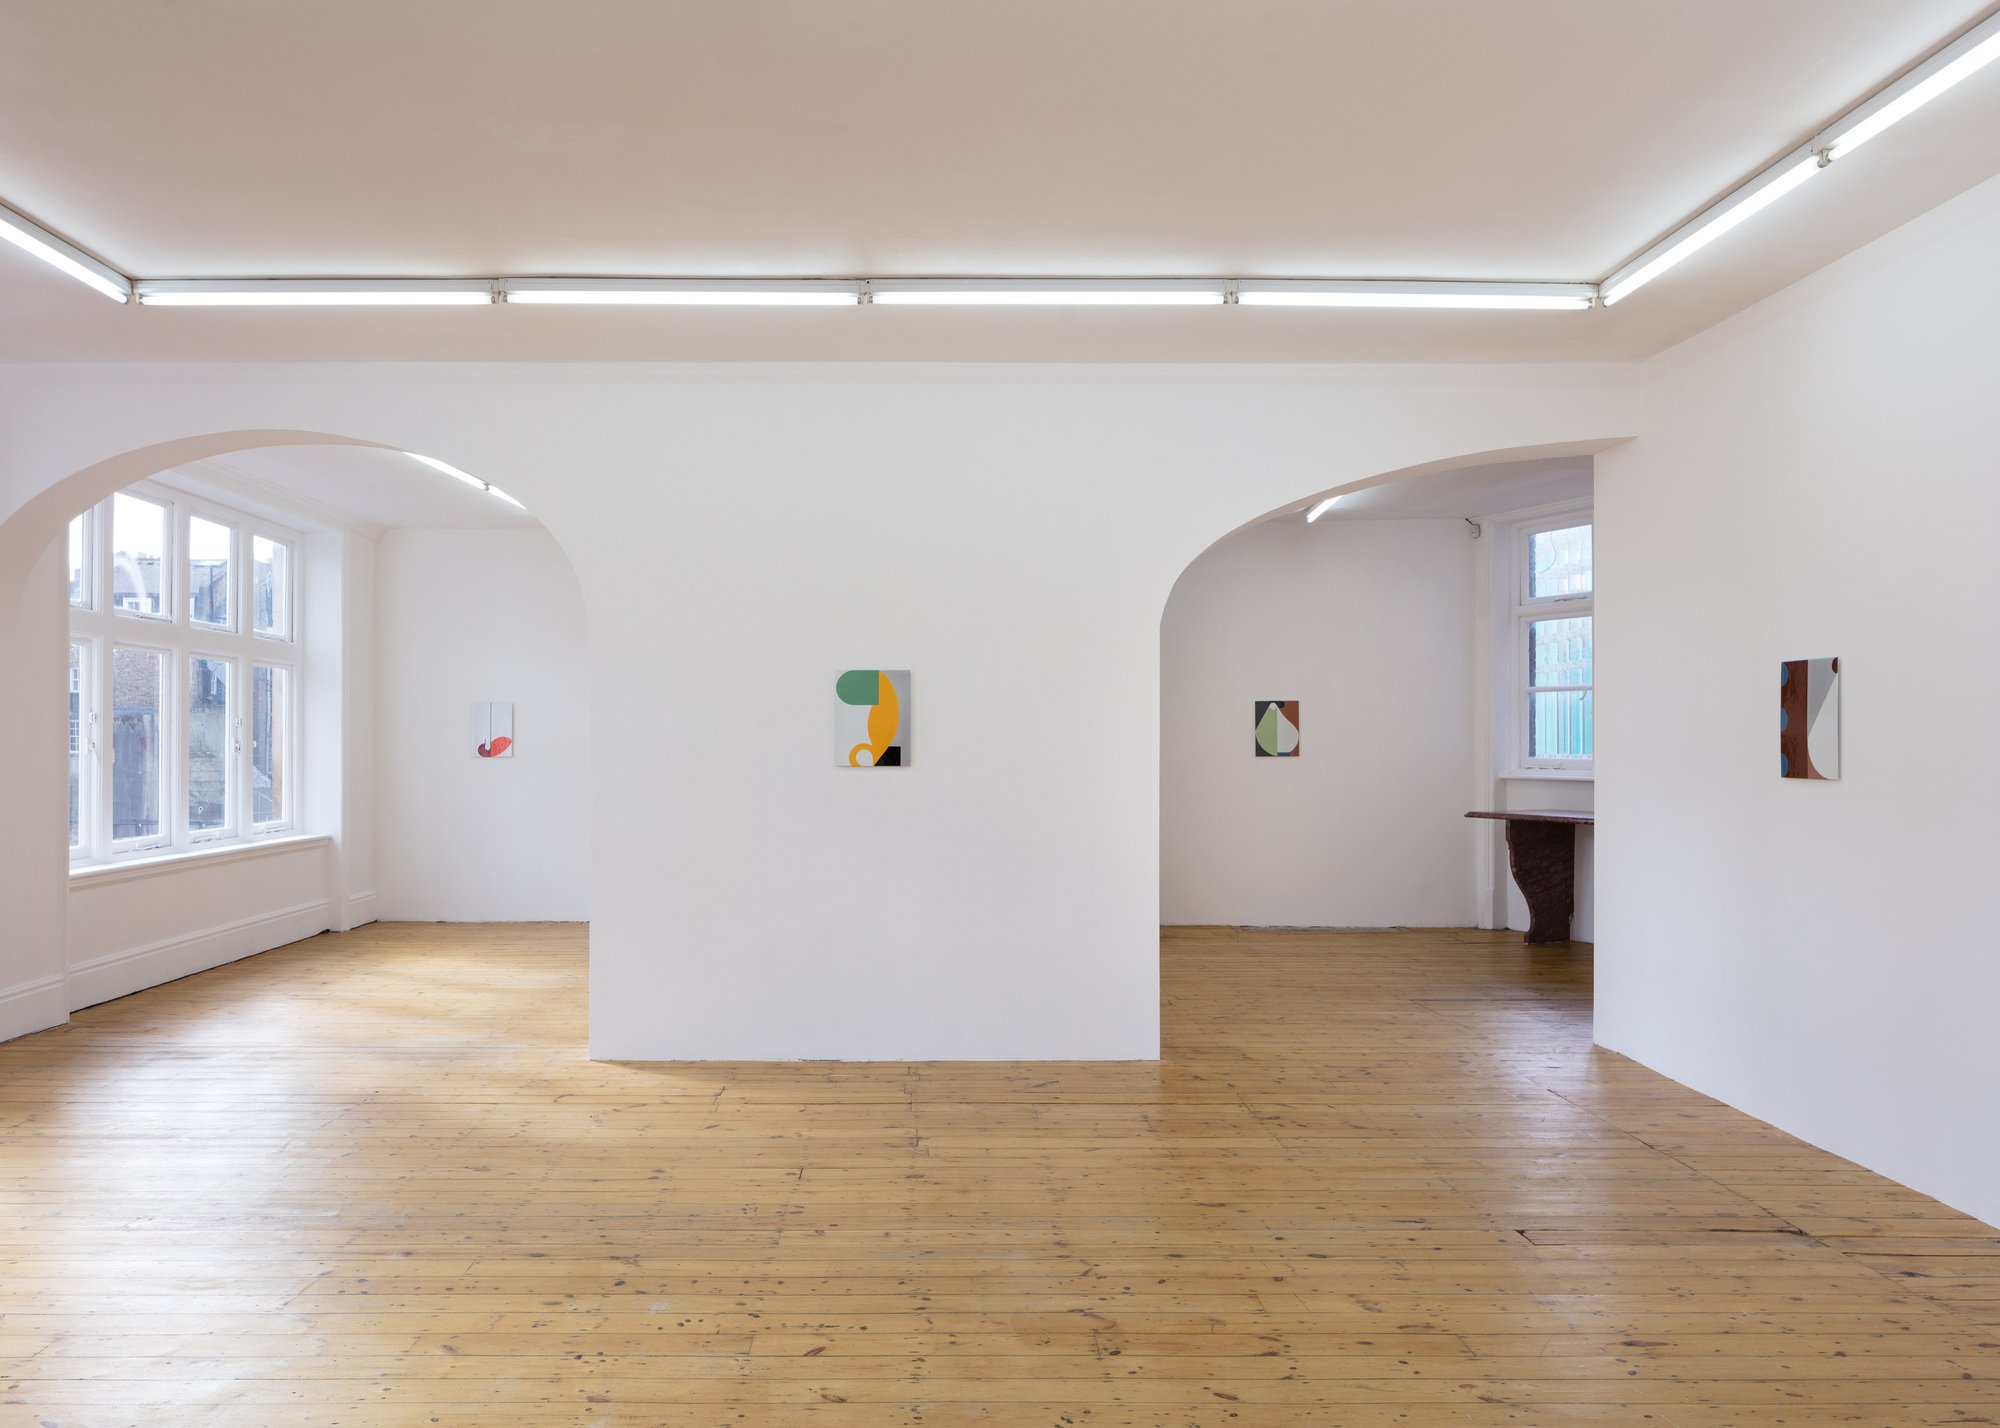 Ulrike Müller, Installation view,The Walls Do Not Fall, Rodeo, London, 2019